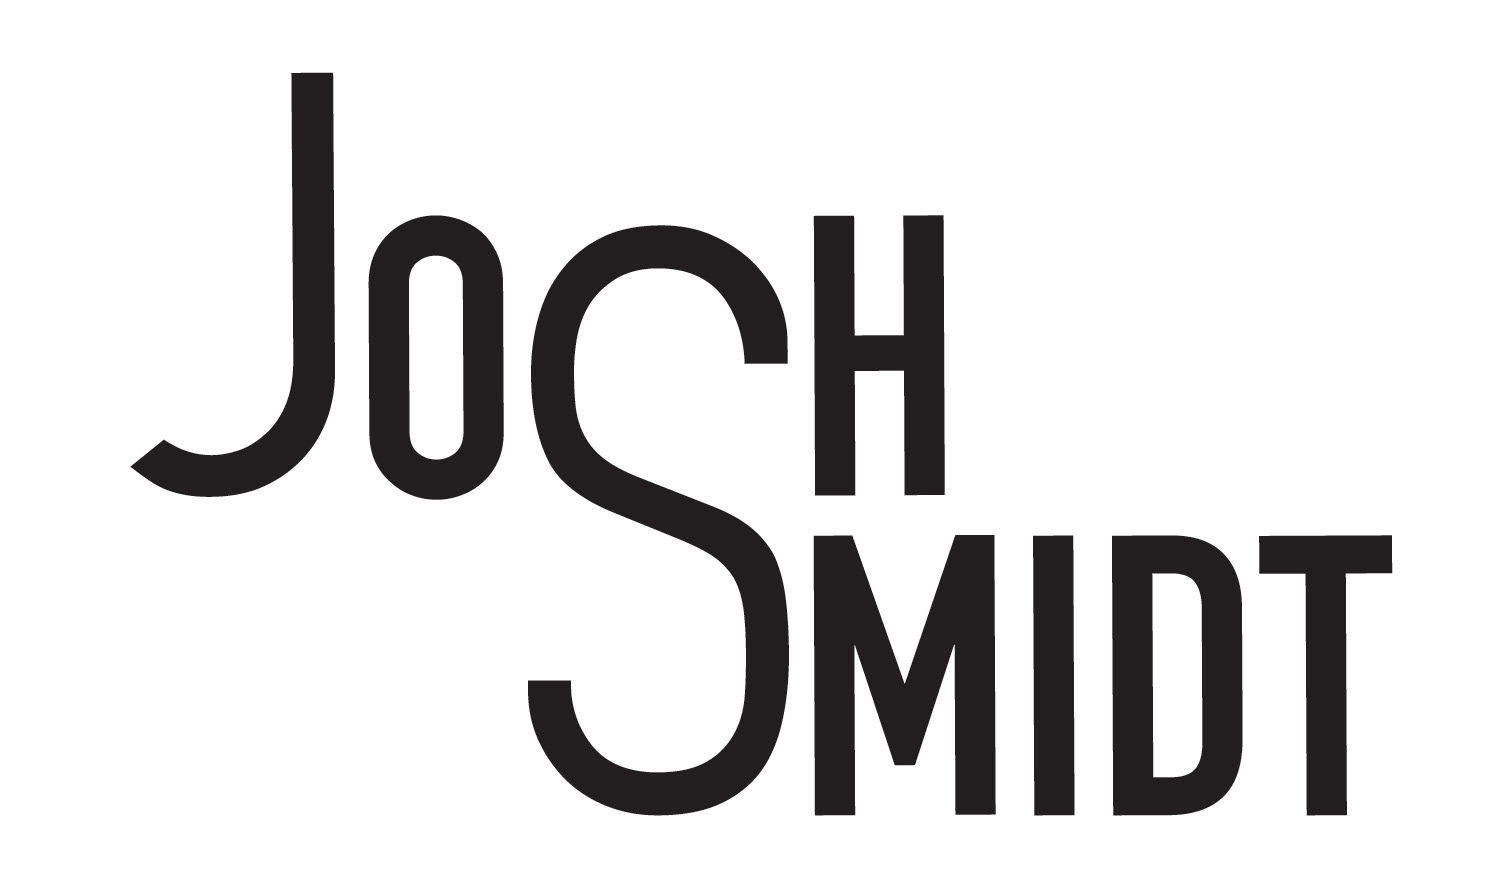 Joshua Smidt